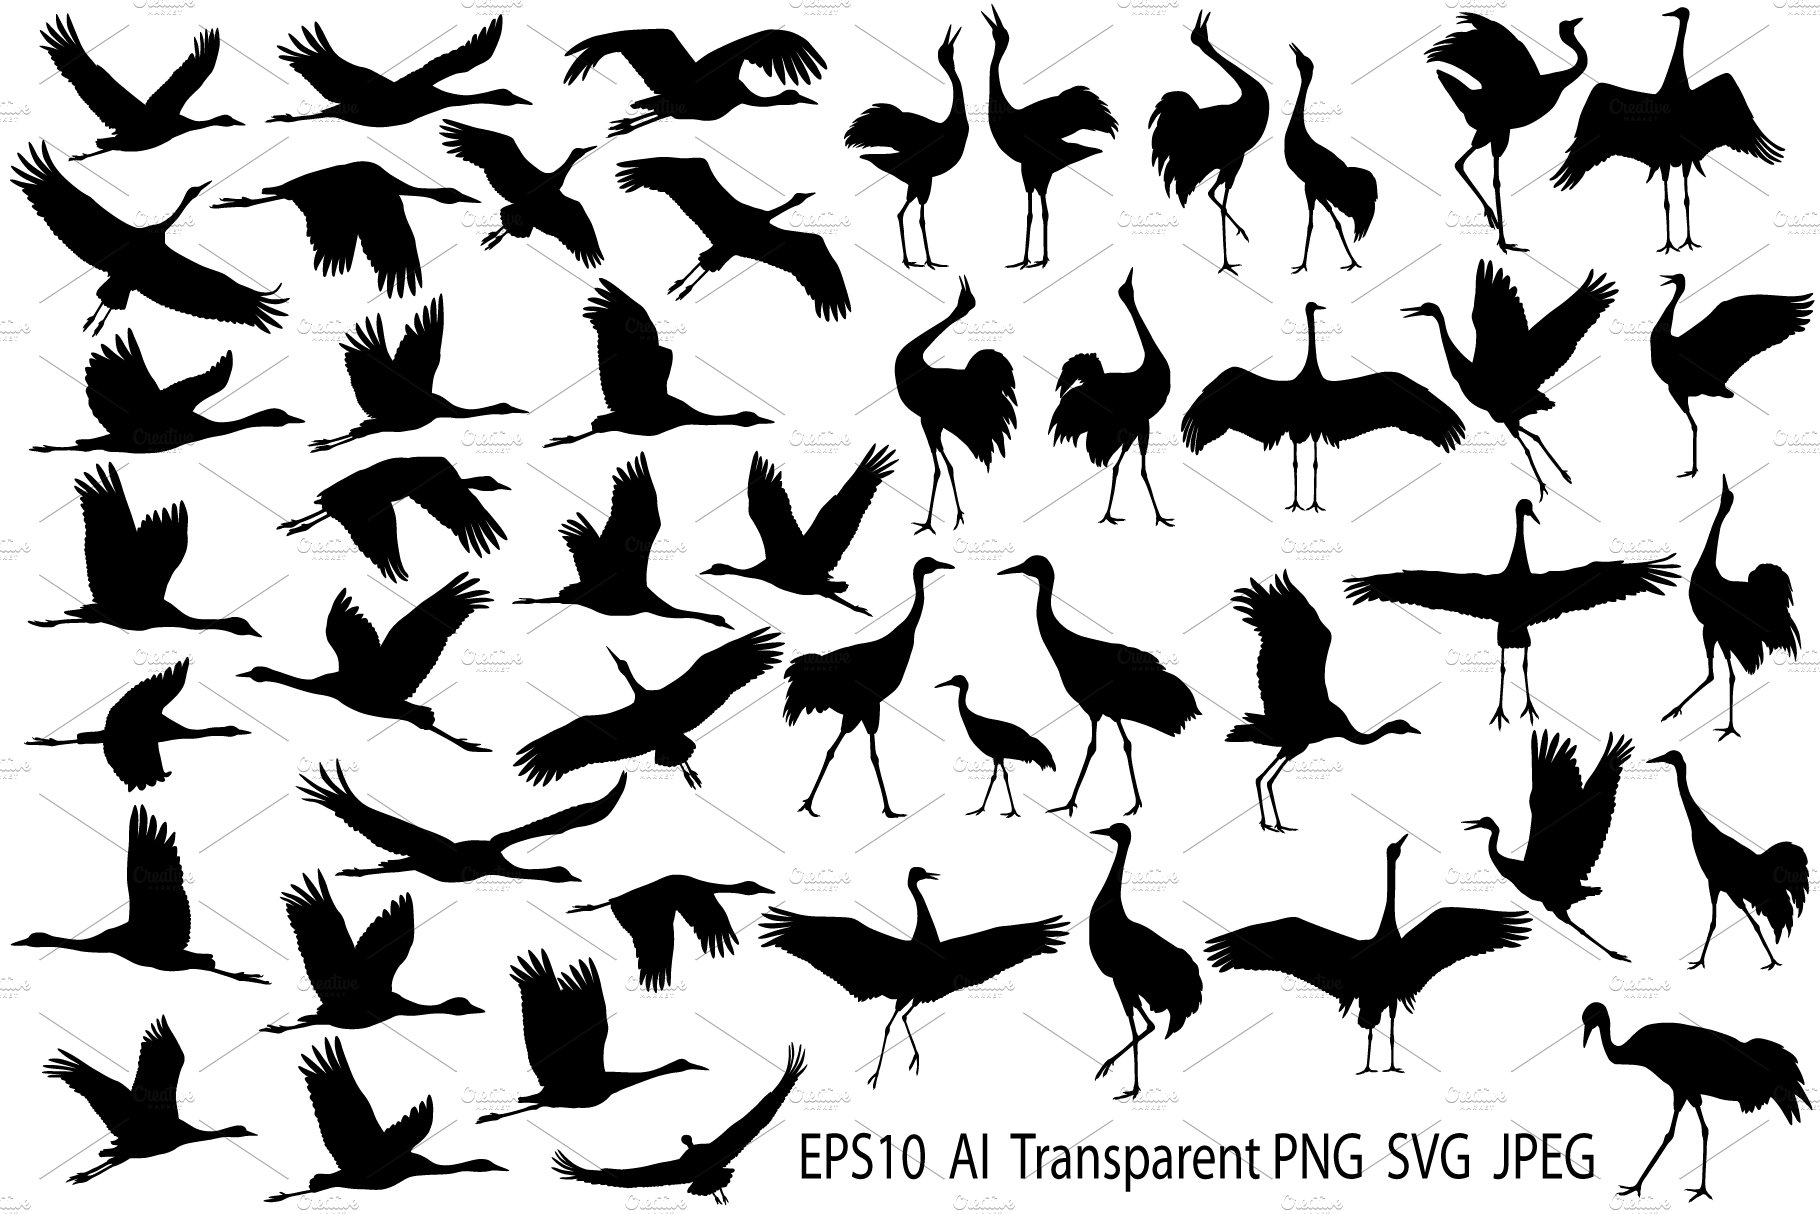 Cranes silhouette cover image.